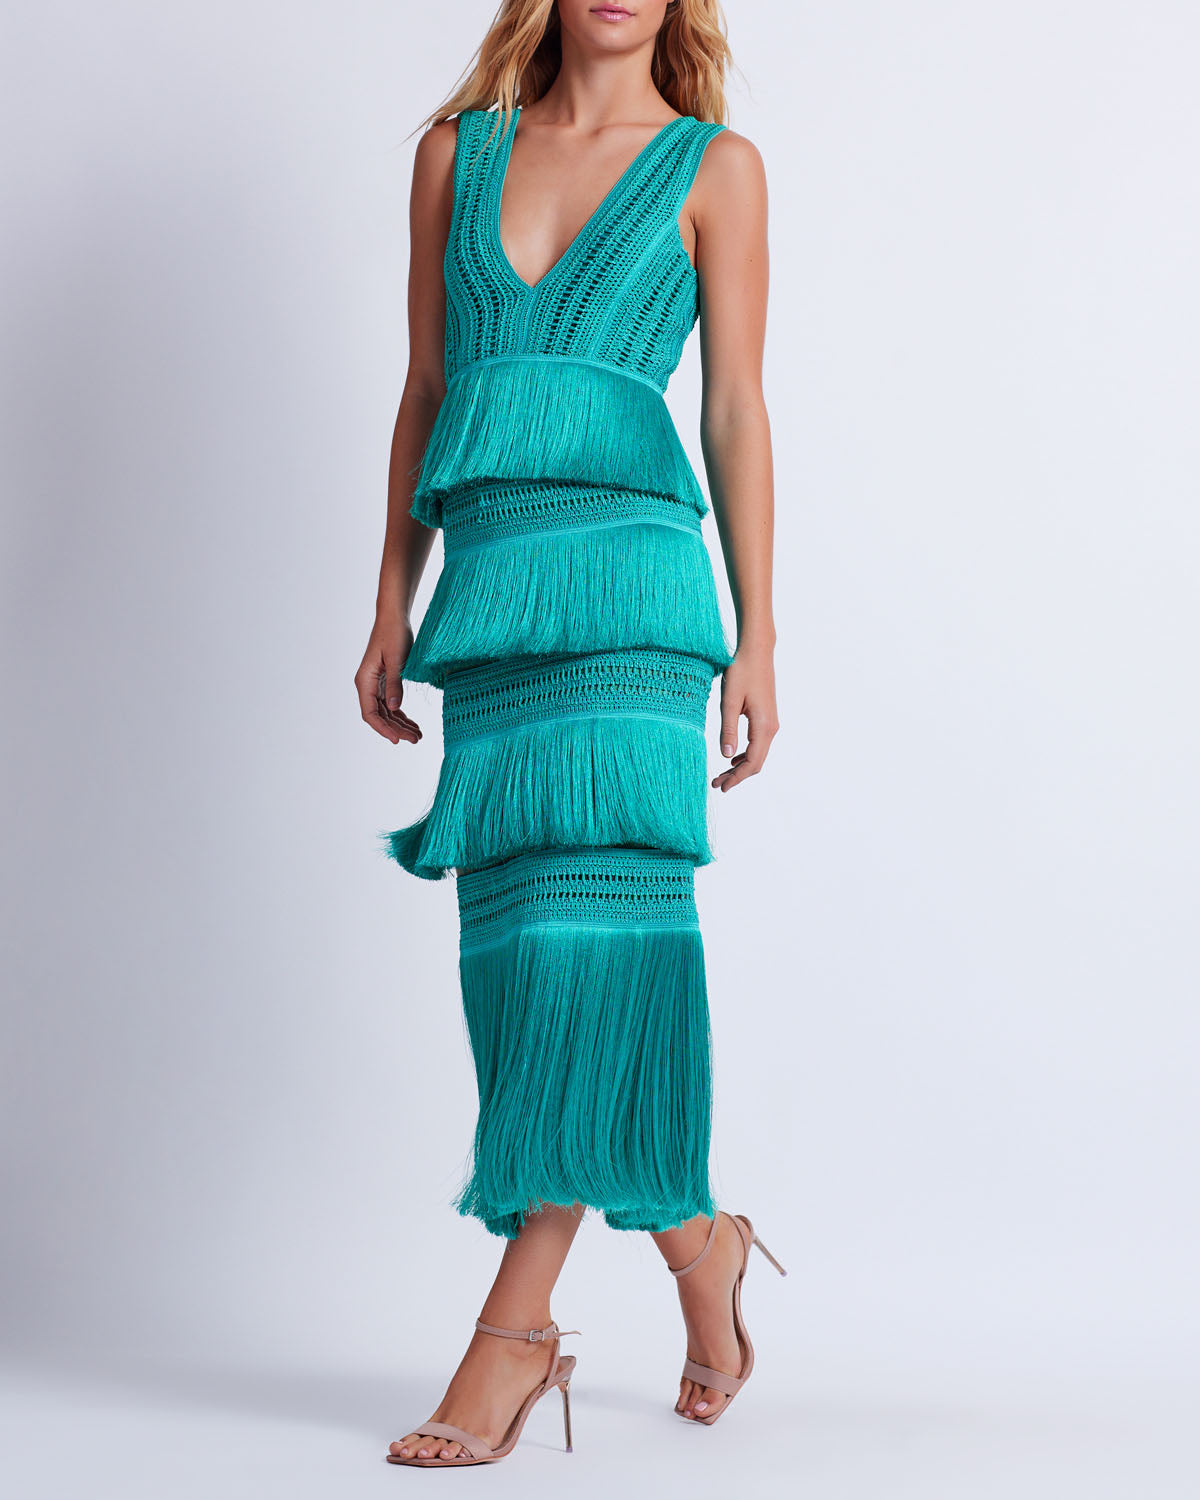 PatBo Plunging Fringe Midi Dress - Premium Midi Dress from Marina St Barth - Just $895! Shop now at Marina St Barth